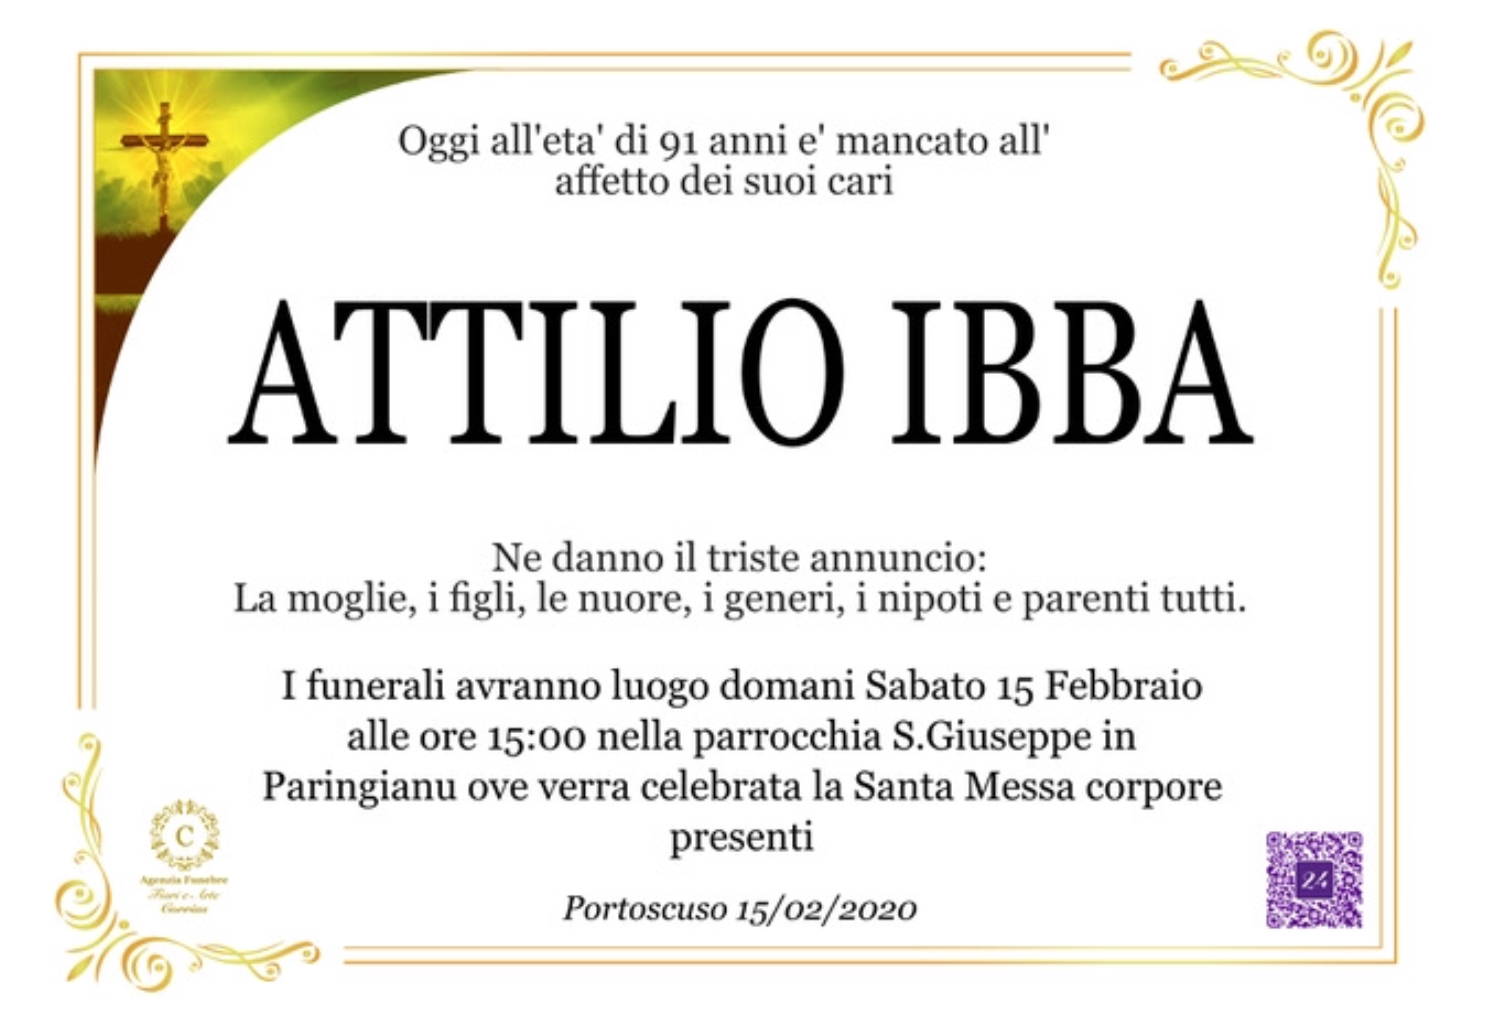 Attilio Ibba